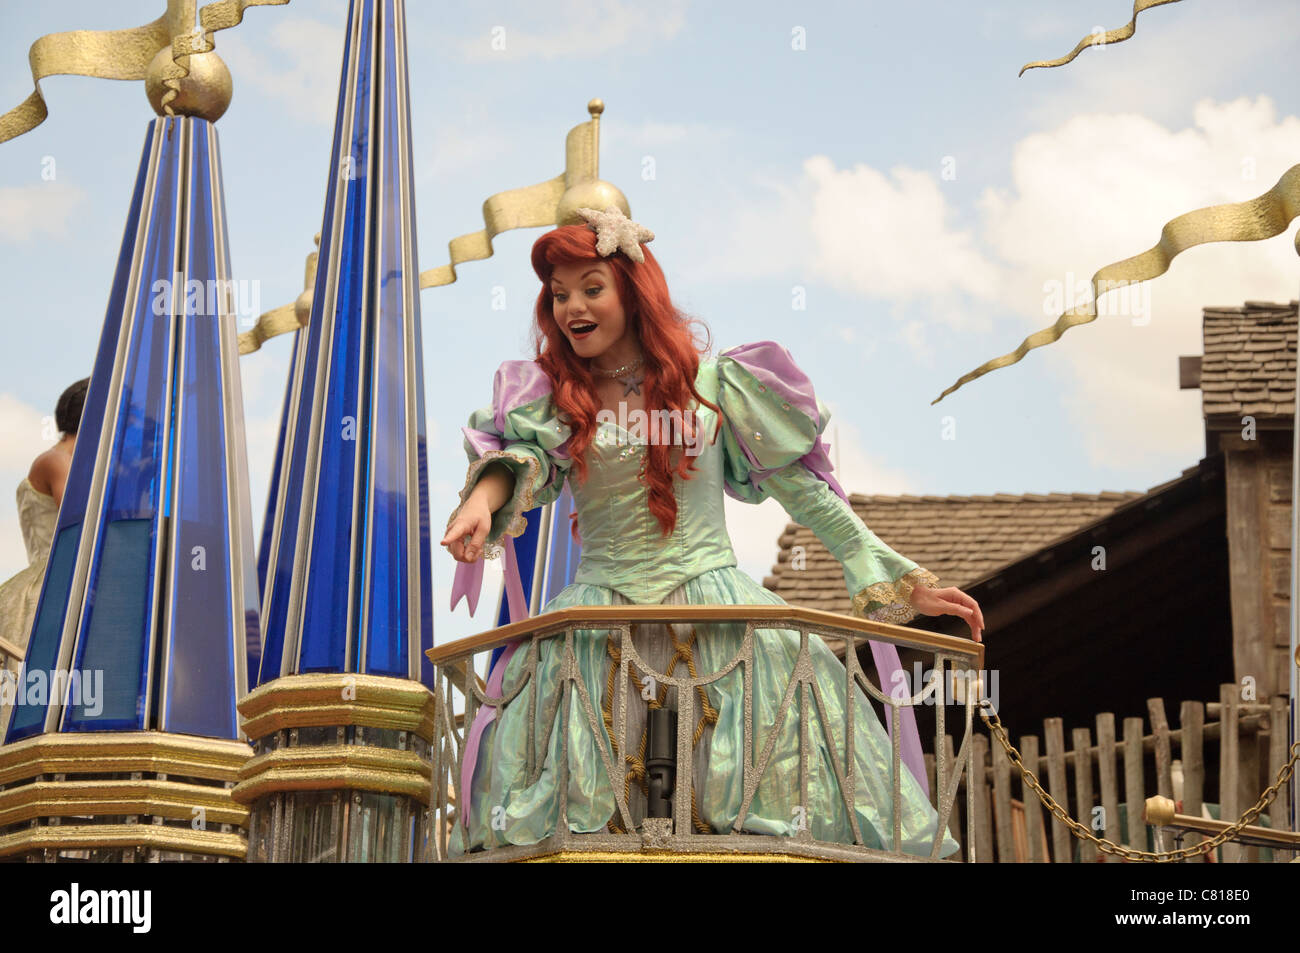 Walt Disney World Florida Magic Kingdom célébrer un rêve viennent vrai parade Ariel la petite sirène Banque D'Images